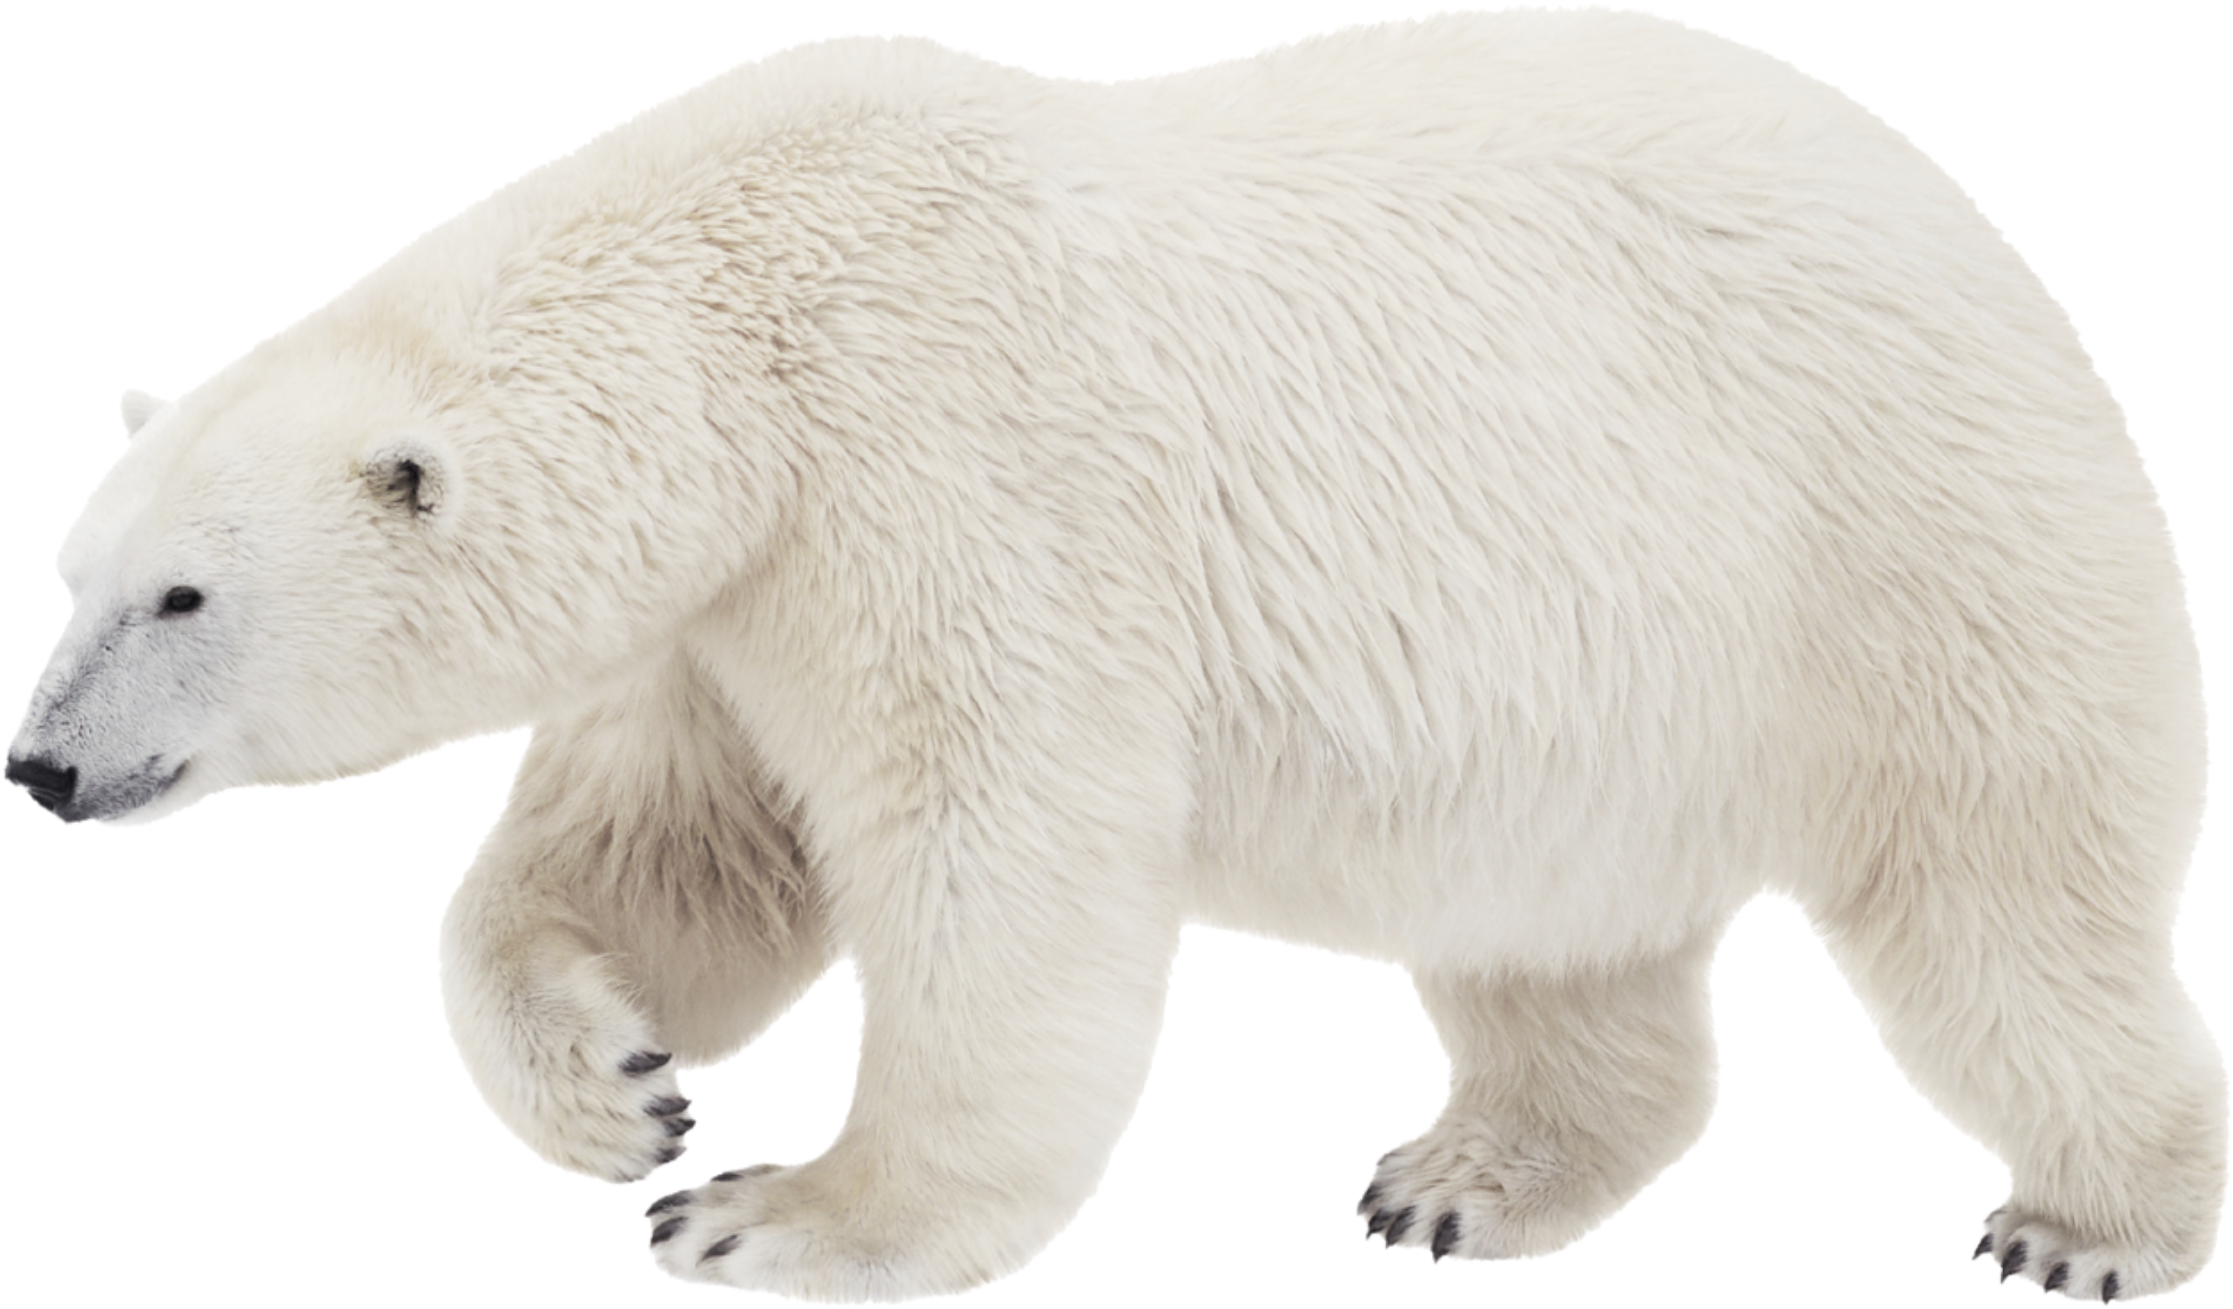 A Polar Bear Walking On A Black Background